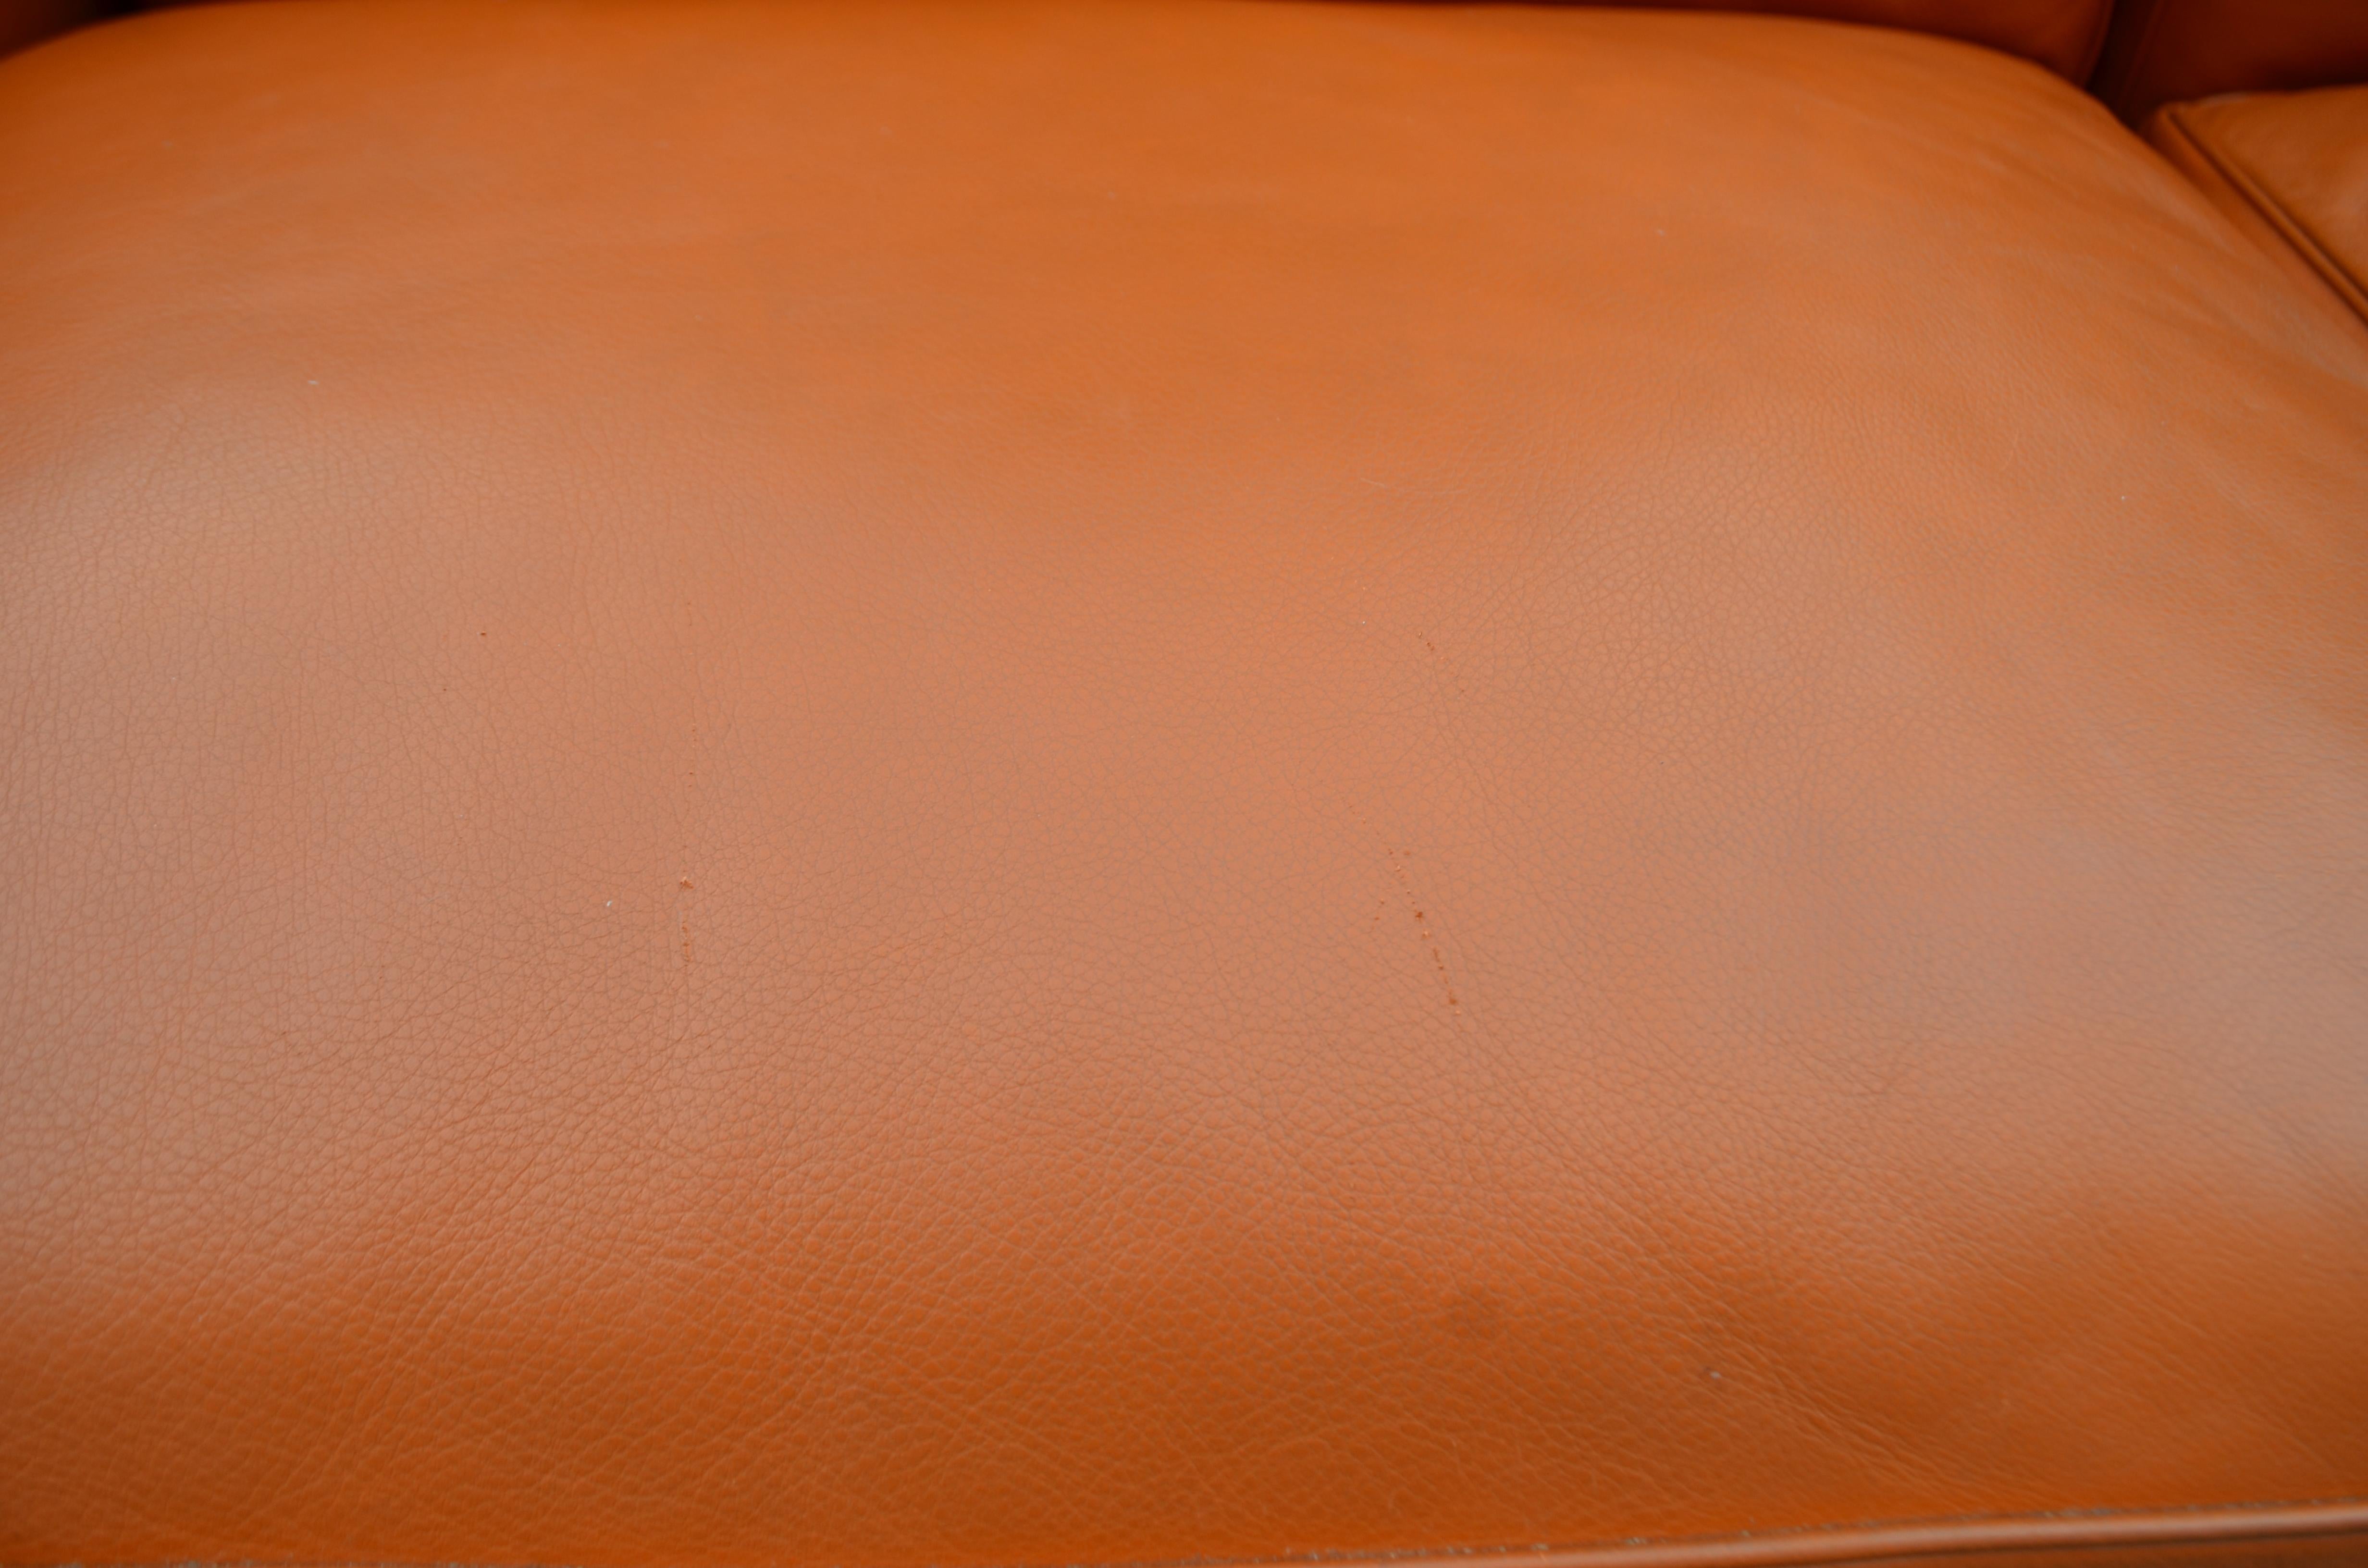 Poltrona Frau Leather Sofa Hermes colour Model Twice by Pierluigi Cerri 2